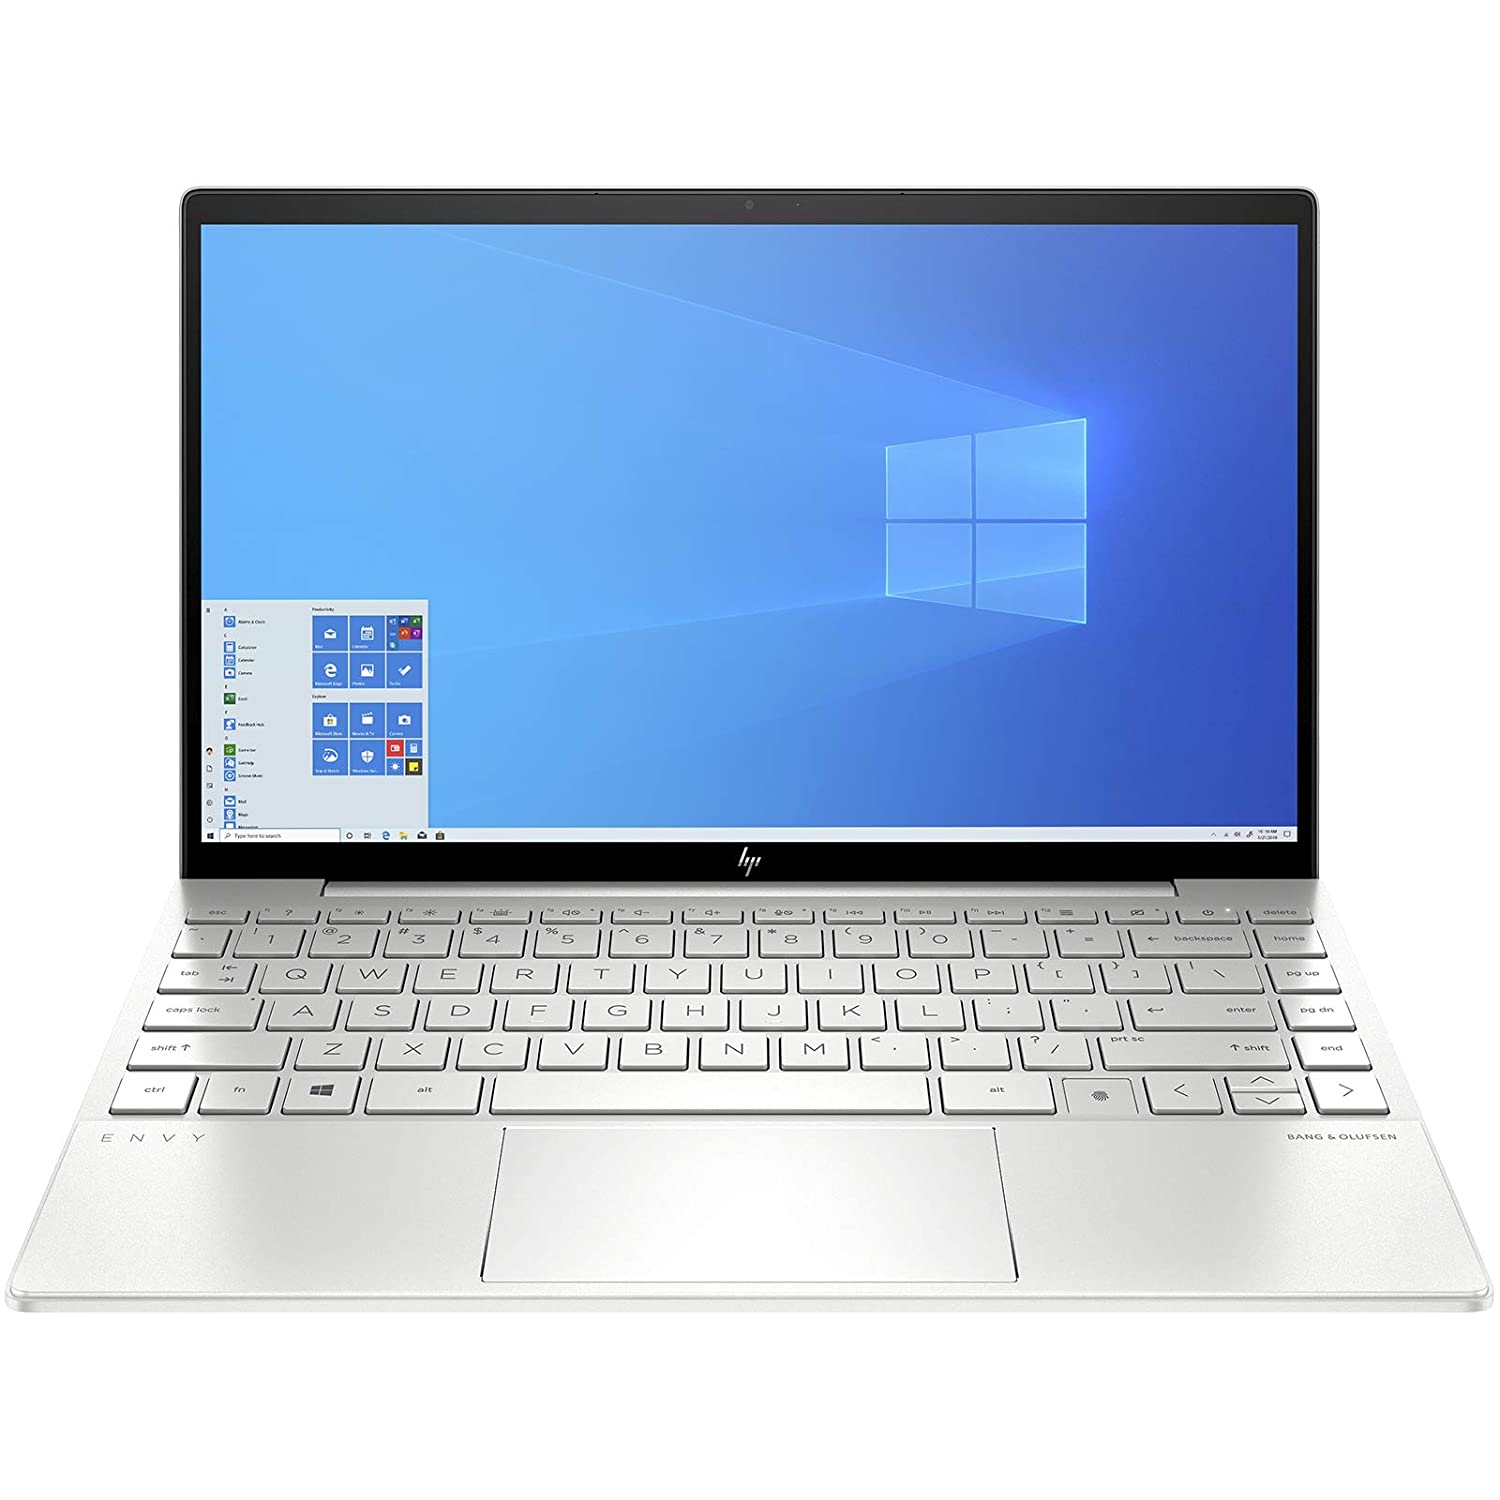 Laptop Hp Envy Core I7 10ma 8gb 512gb 133 Fhd Touch W10 Novicompu 1308